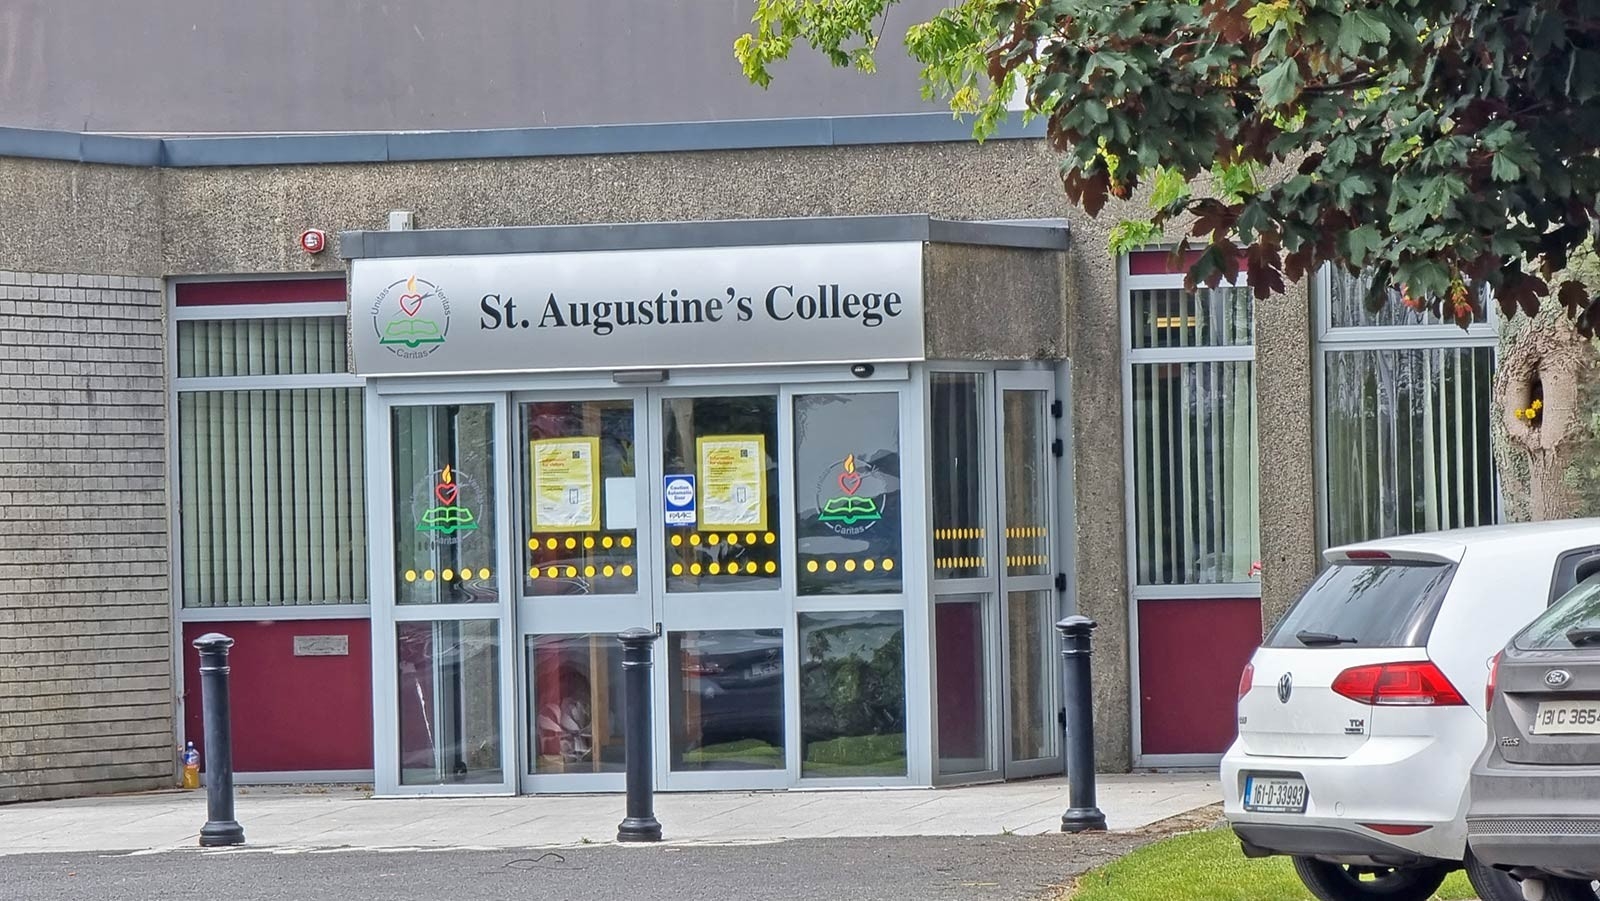 Historia del St Augustines College